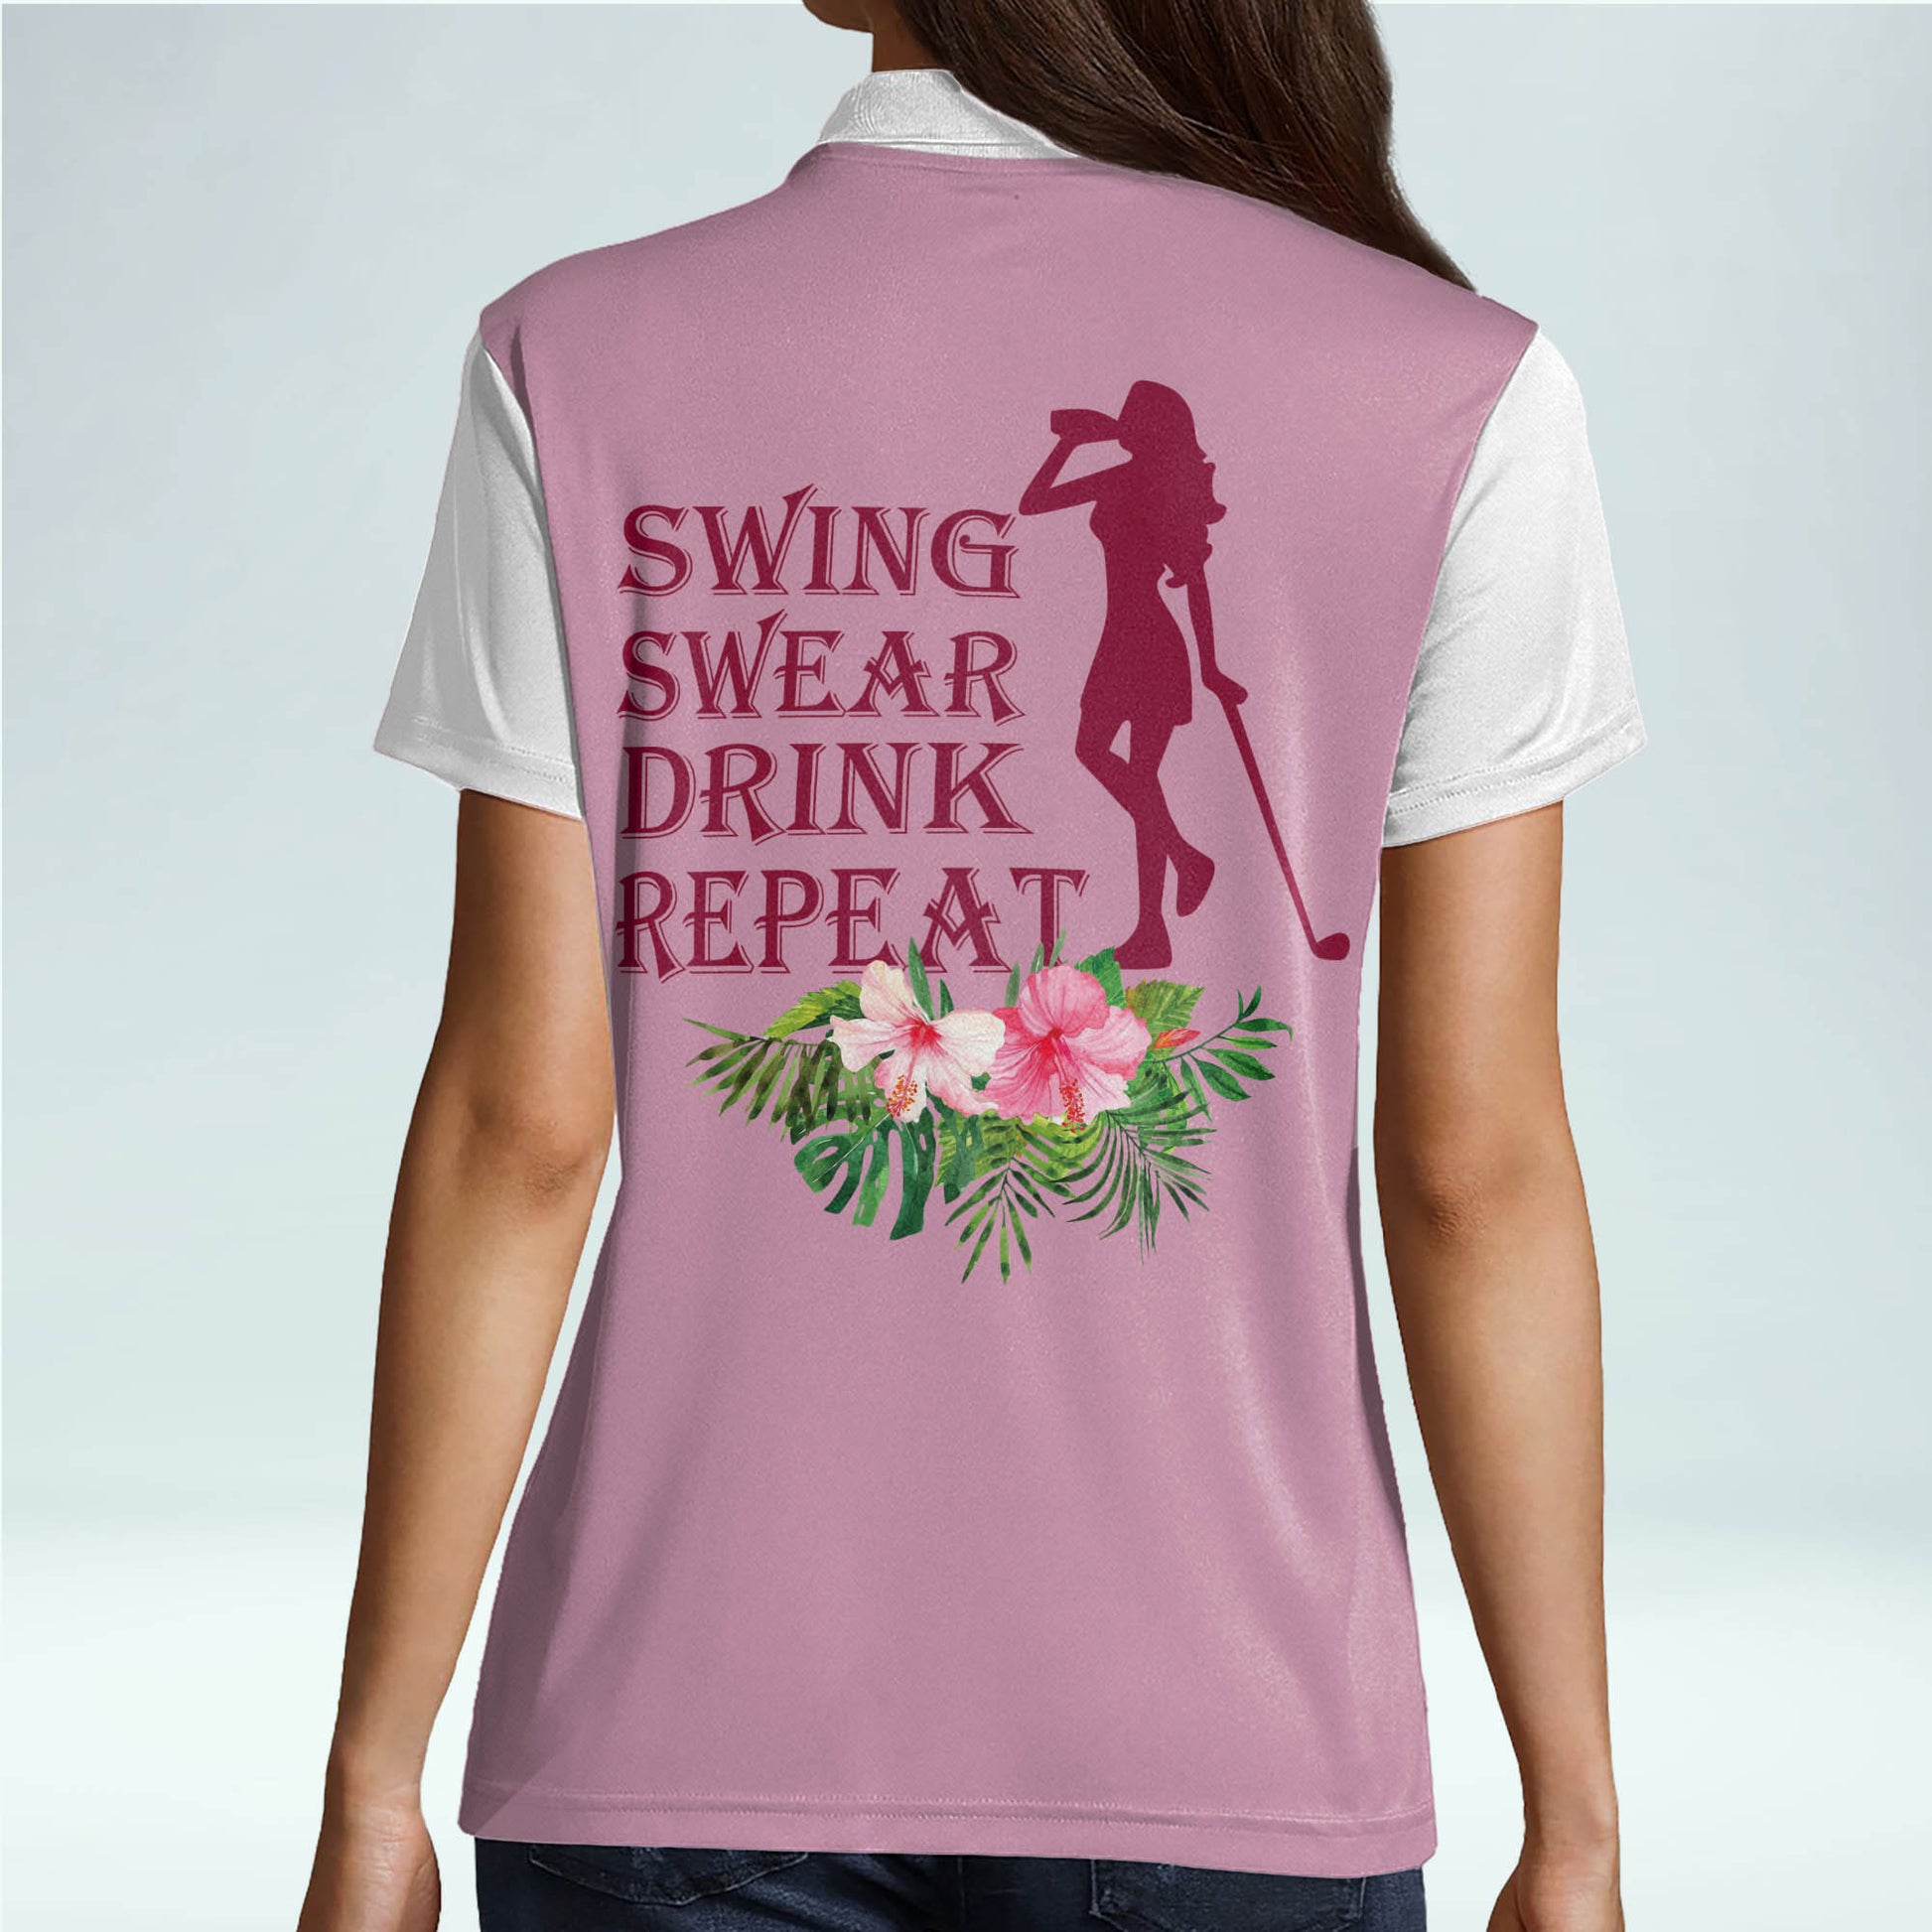 For Personalized Golf Golf Shirts Swear Drink Women, Shirt Womens Lasfour Short Repeat Swing Shirt, Golf Sleeve Funny